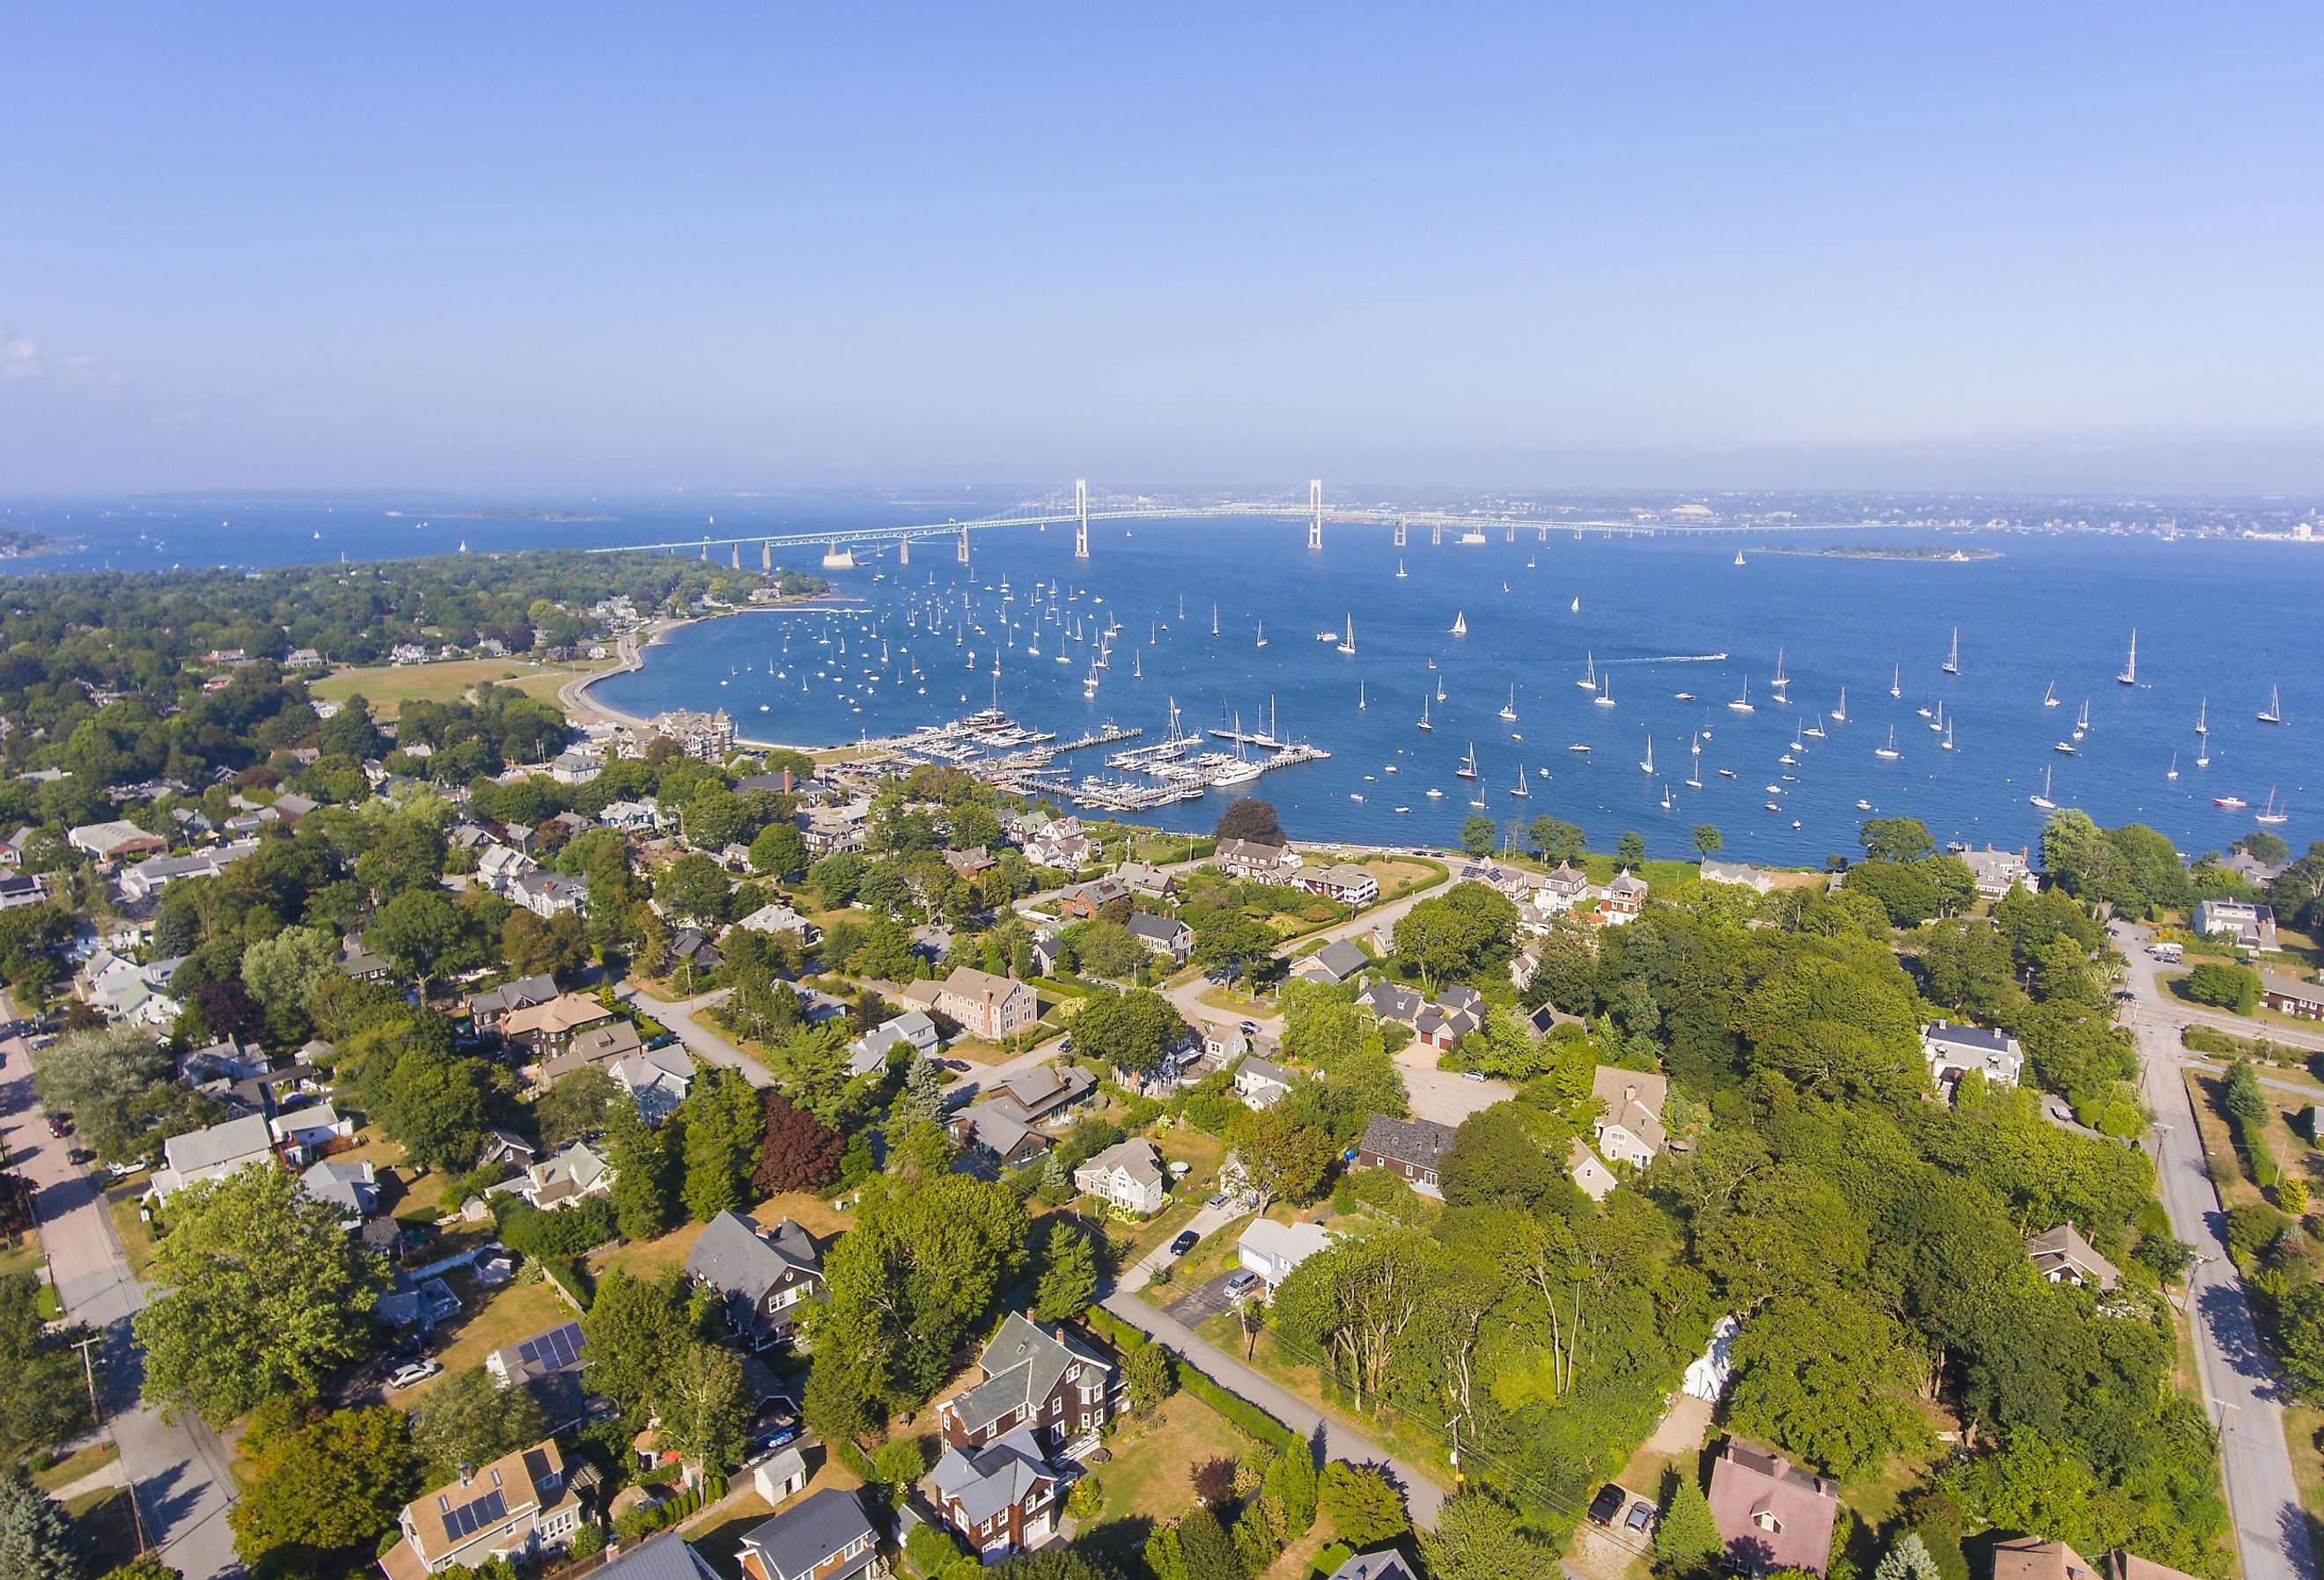 Aerial view of Claiborne Pell Newport Bridge on Narragansett Bay and town of Jamestown, Rhode Island.